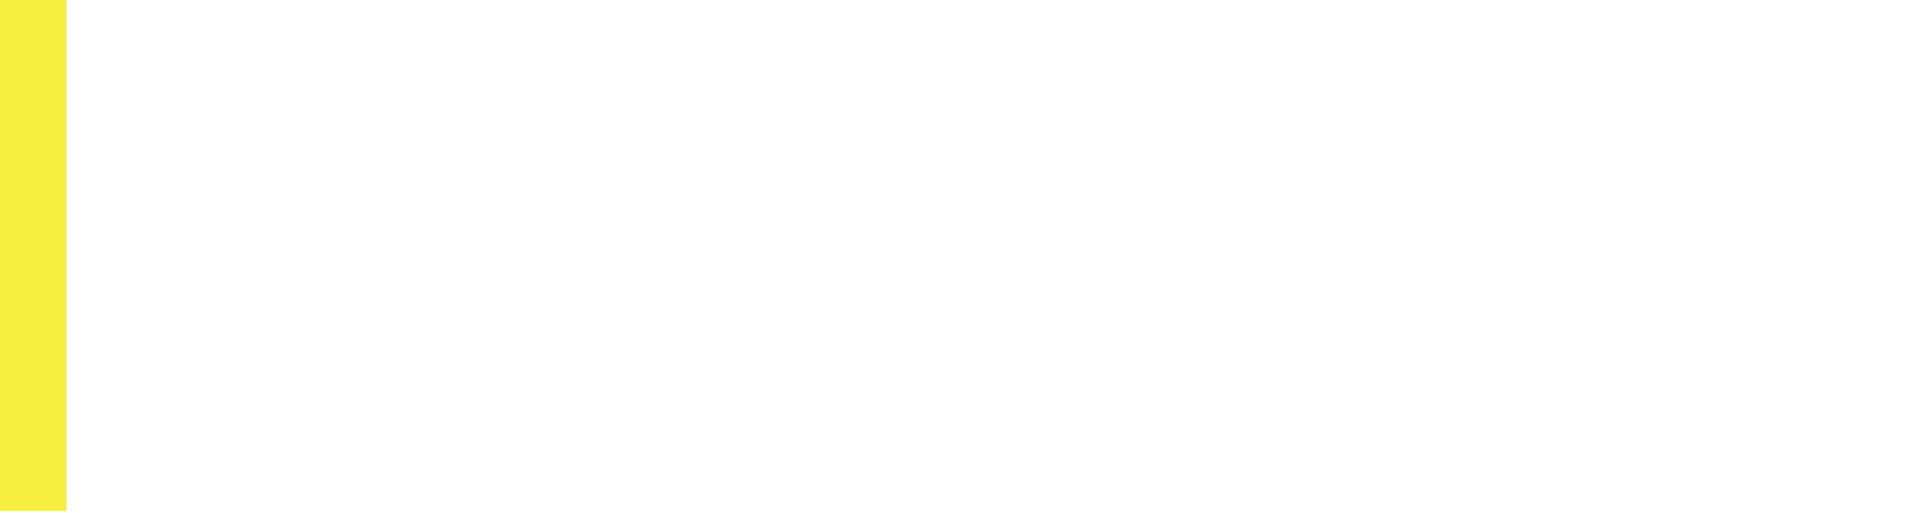 Re-Entry Workforce Development Demonstration Grants - White